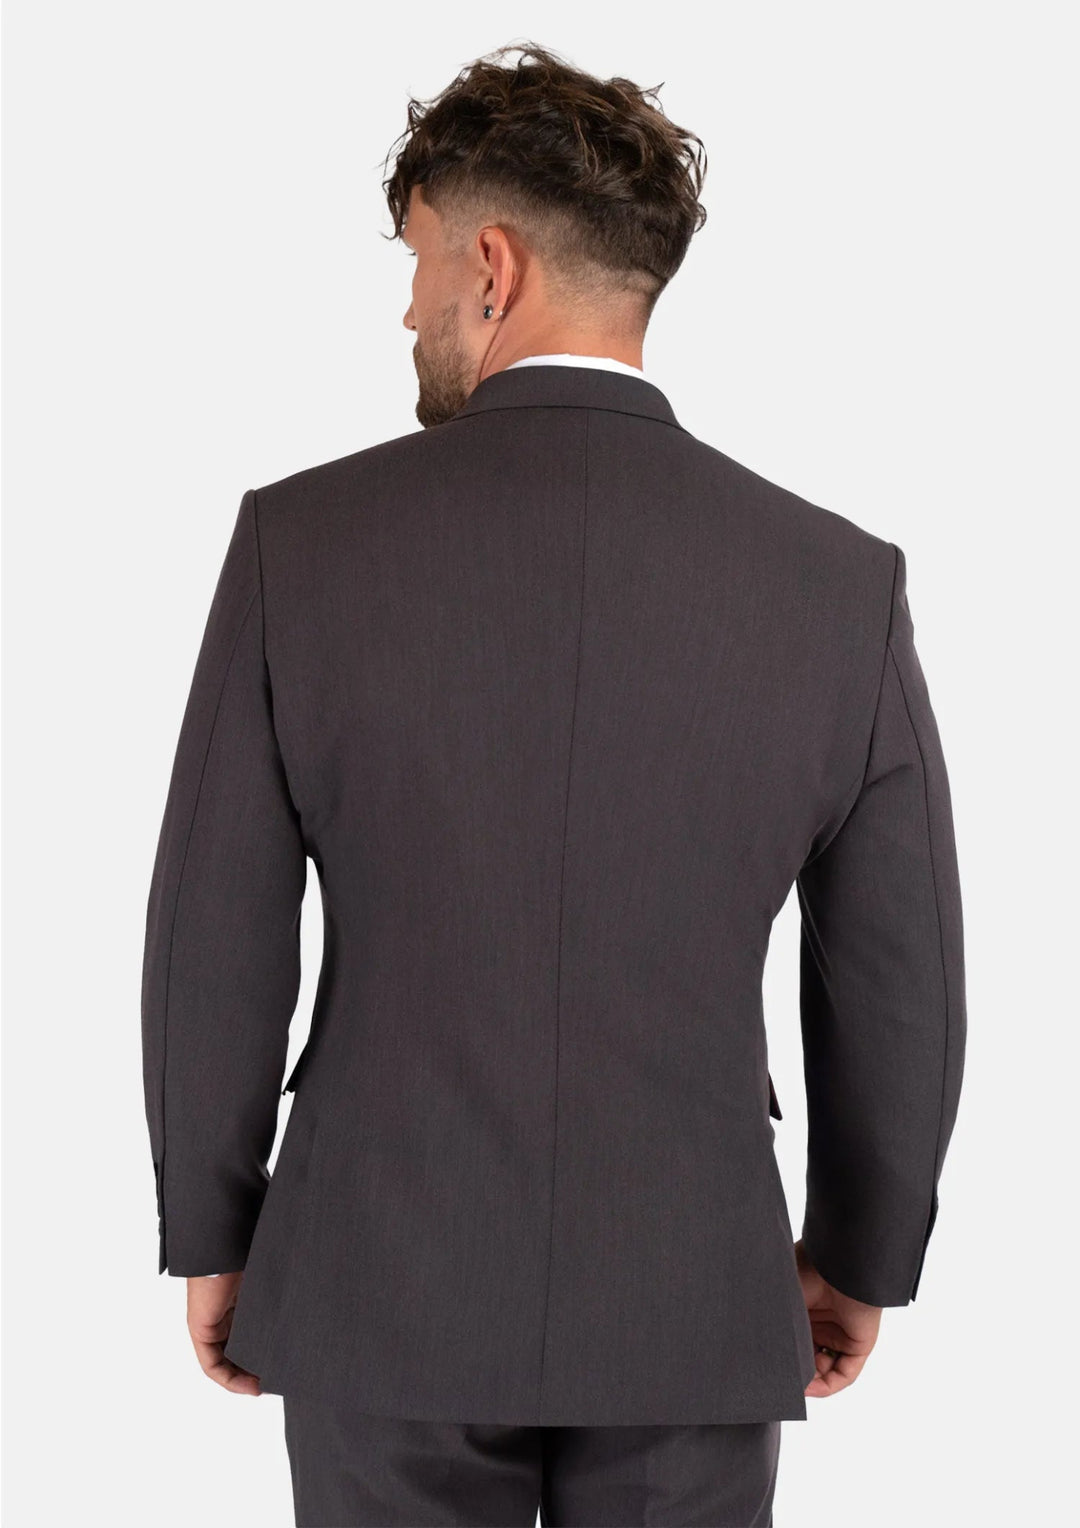 Hudson Charcoal Stretch Suit - SARTORO